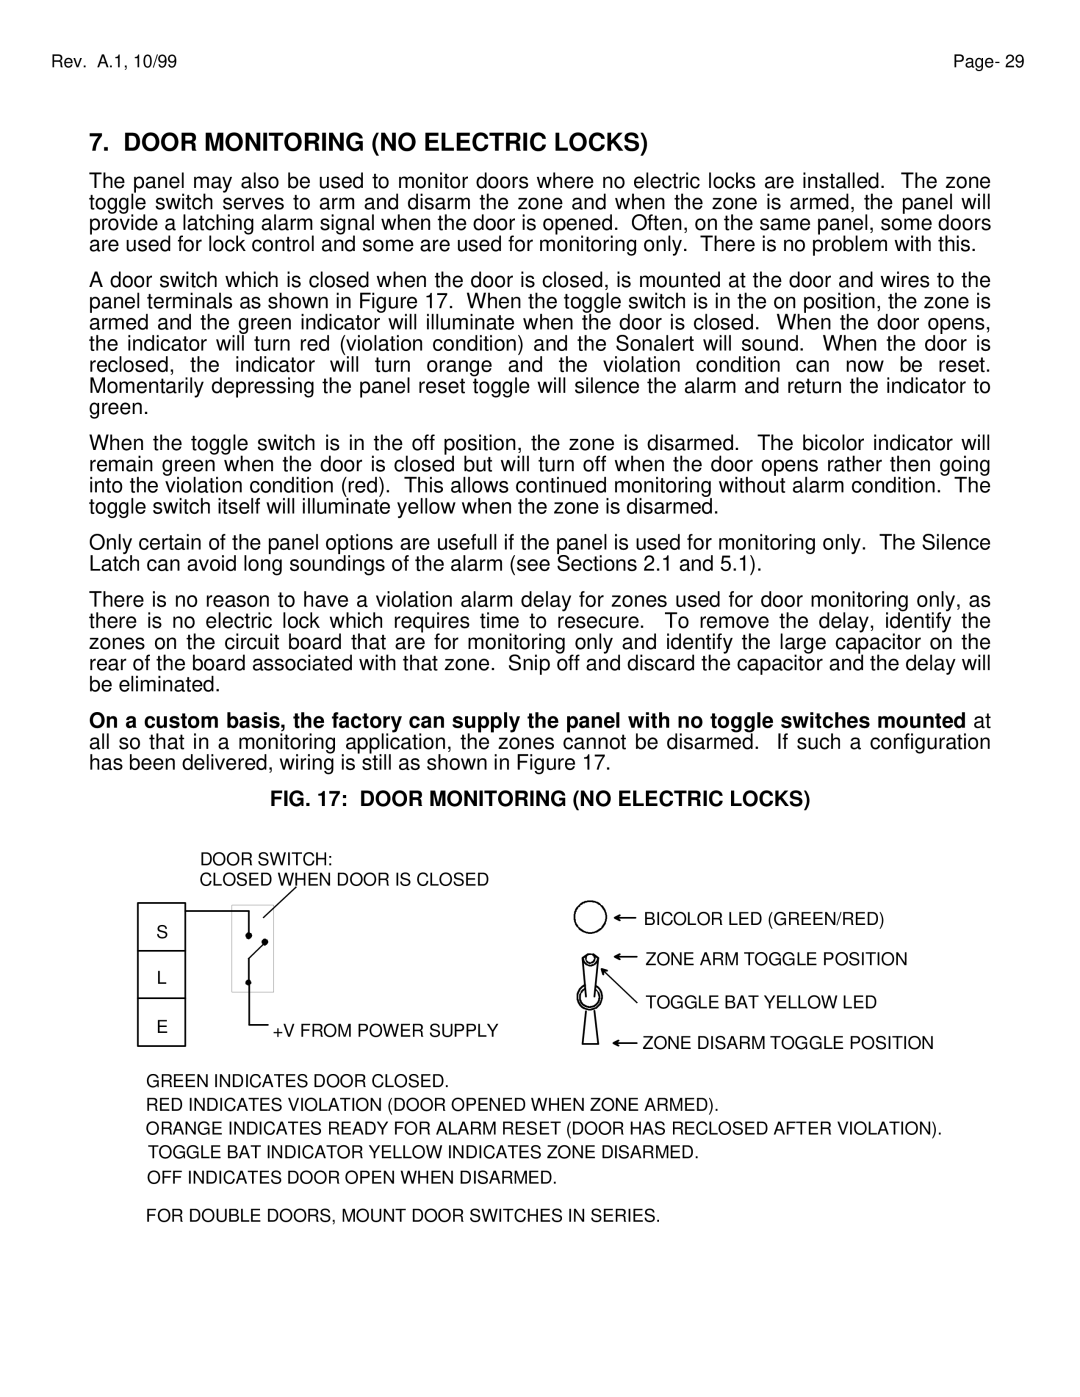 Assa ELECTRIC LOCK manual Door Monitoring no Electric Locks 